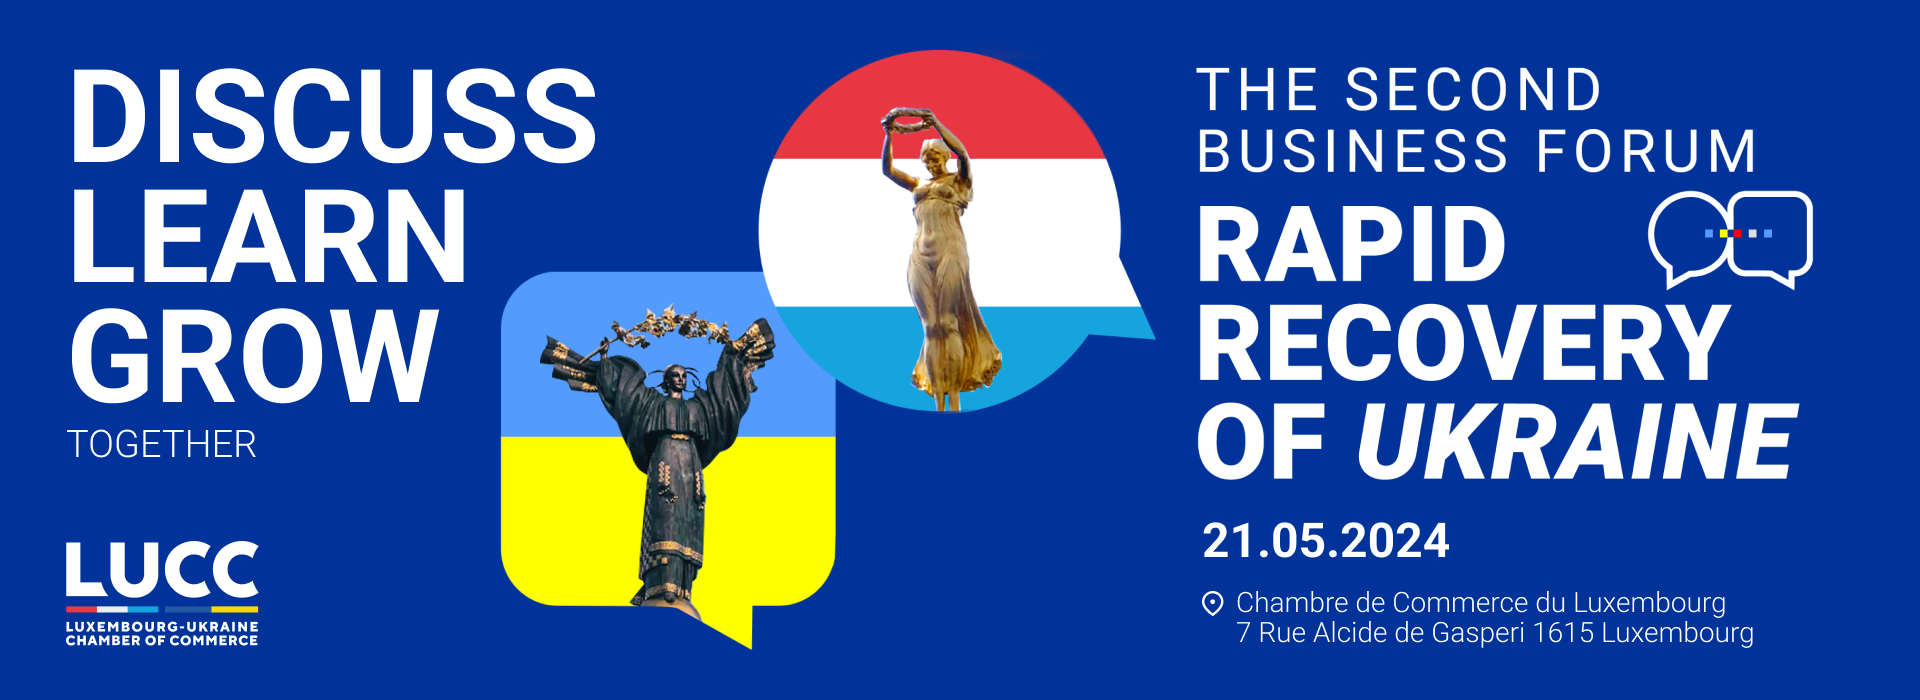 Second Luxembourg-Ukraine Business Forum 